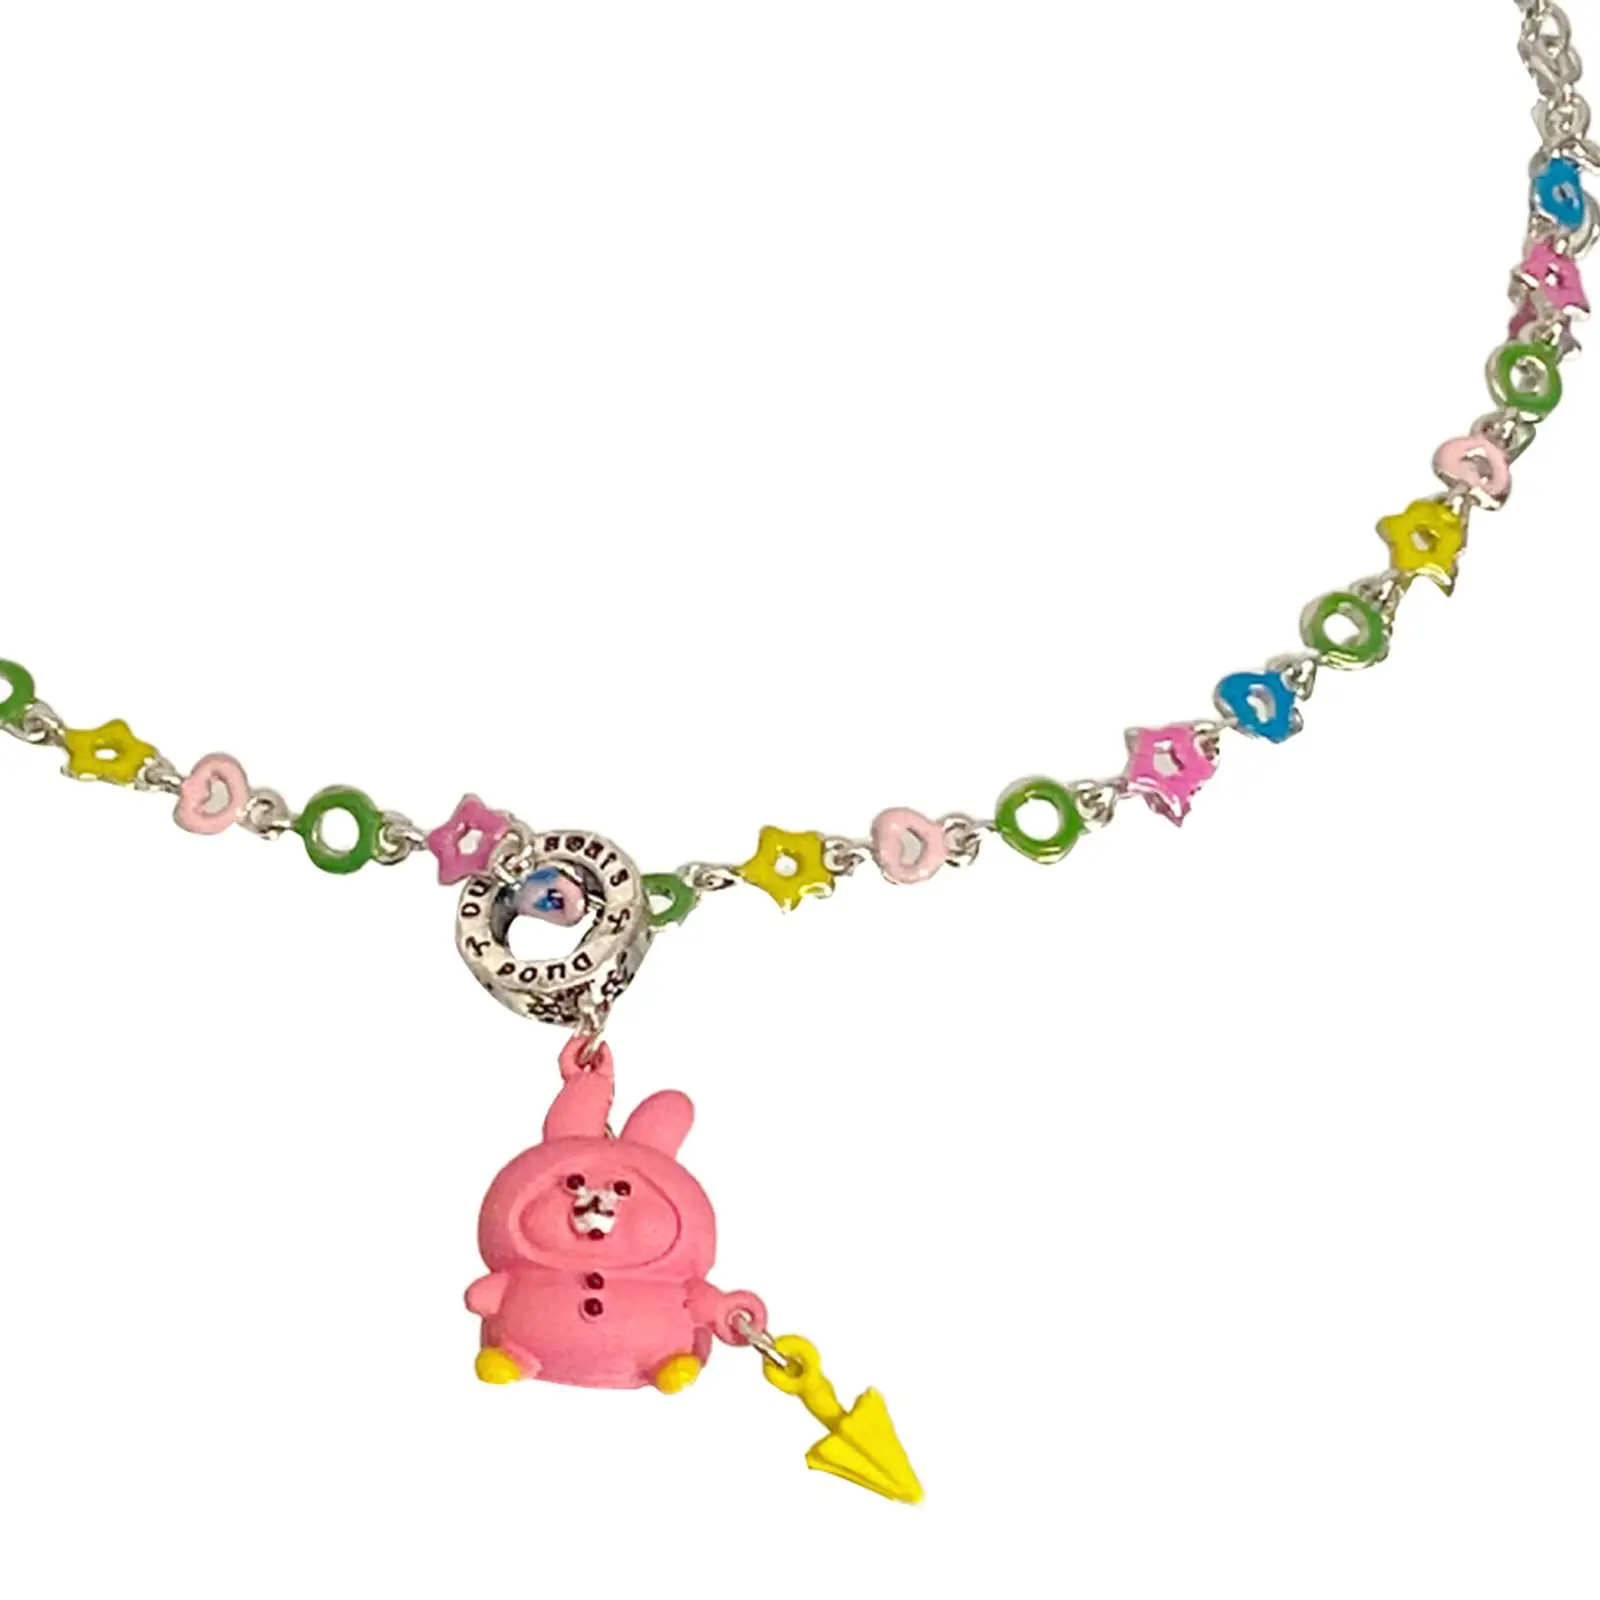 Colorful Choker Necklace Stylish Boho Cartoon Rabbit Pendant Necklace for Graduation Anniversary Beach Birthday Gift Party